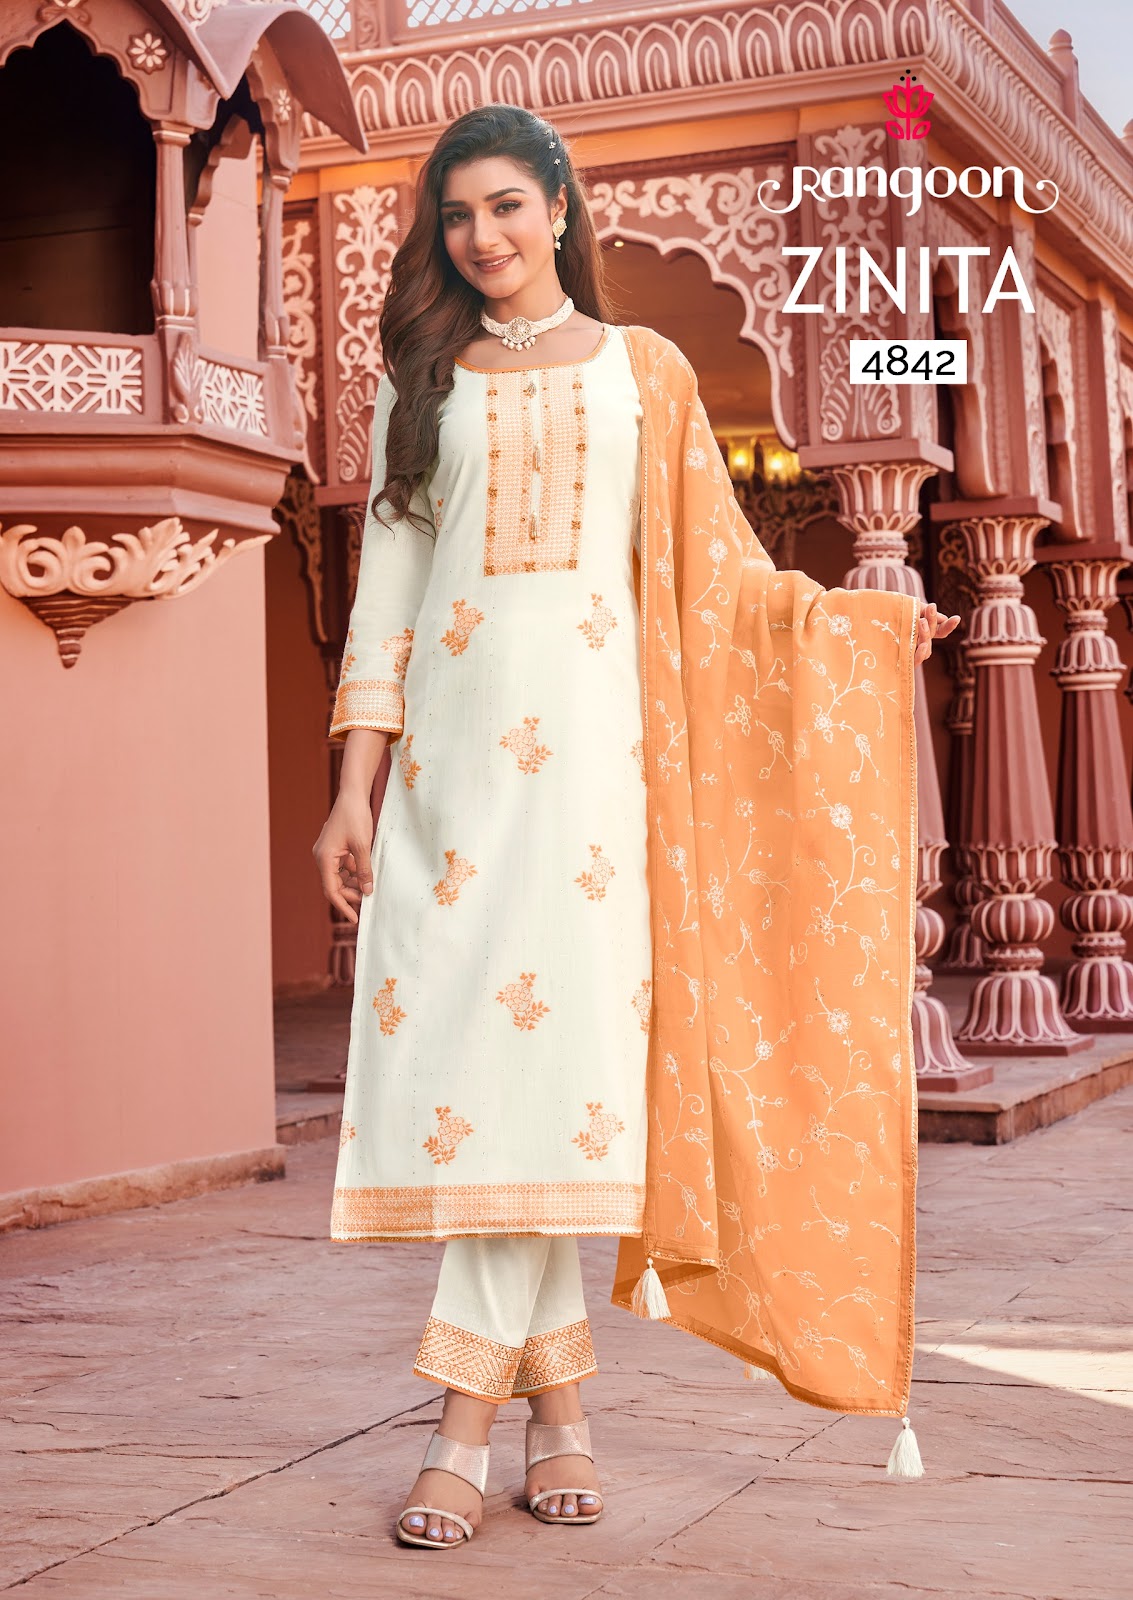 Zinita Rangoon Cotton Jacquard Readymade Pant Style Suits